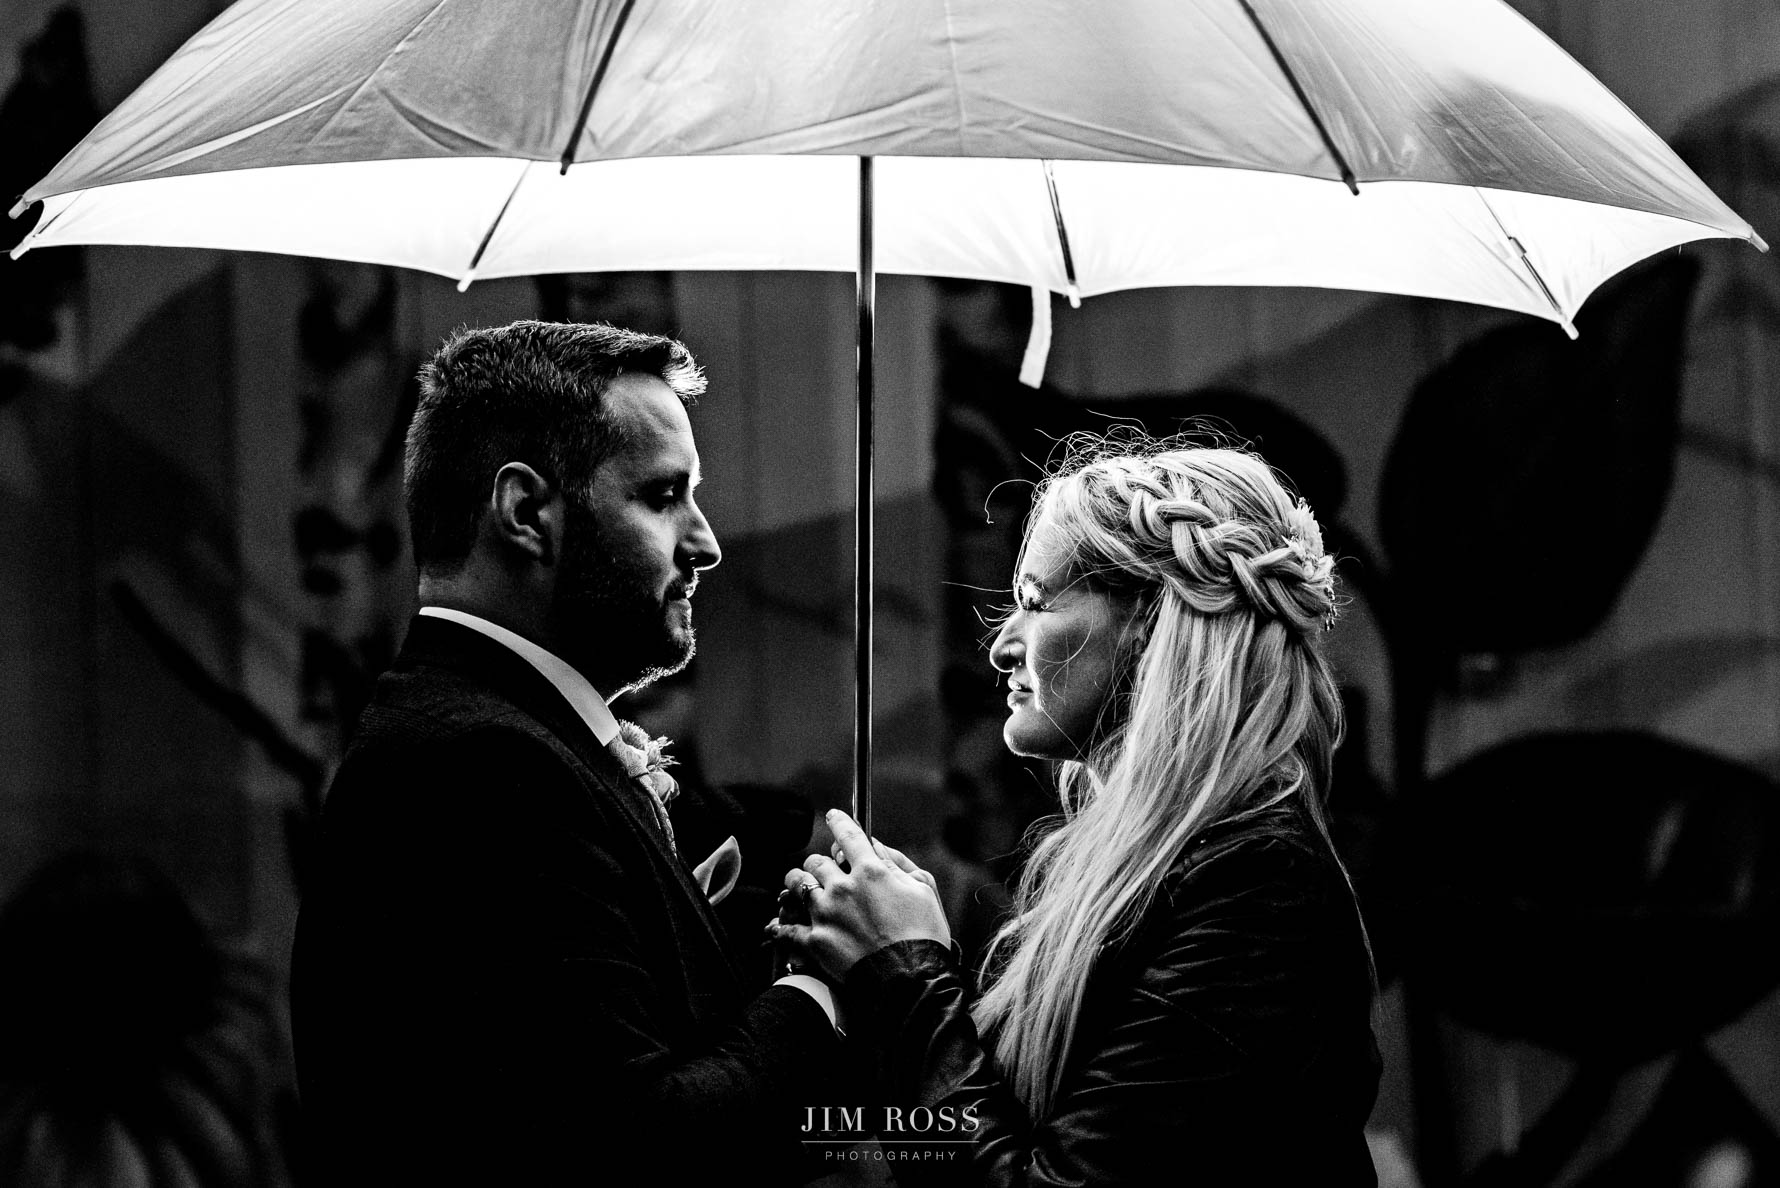 Night portrait under umbrella - black and white